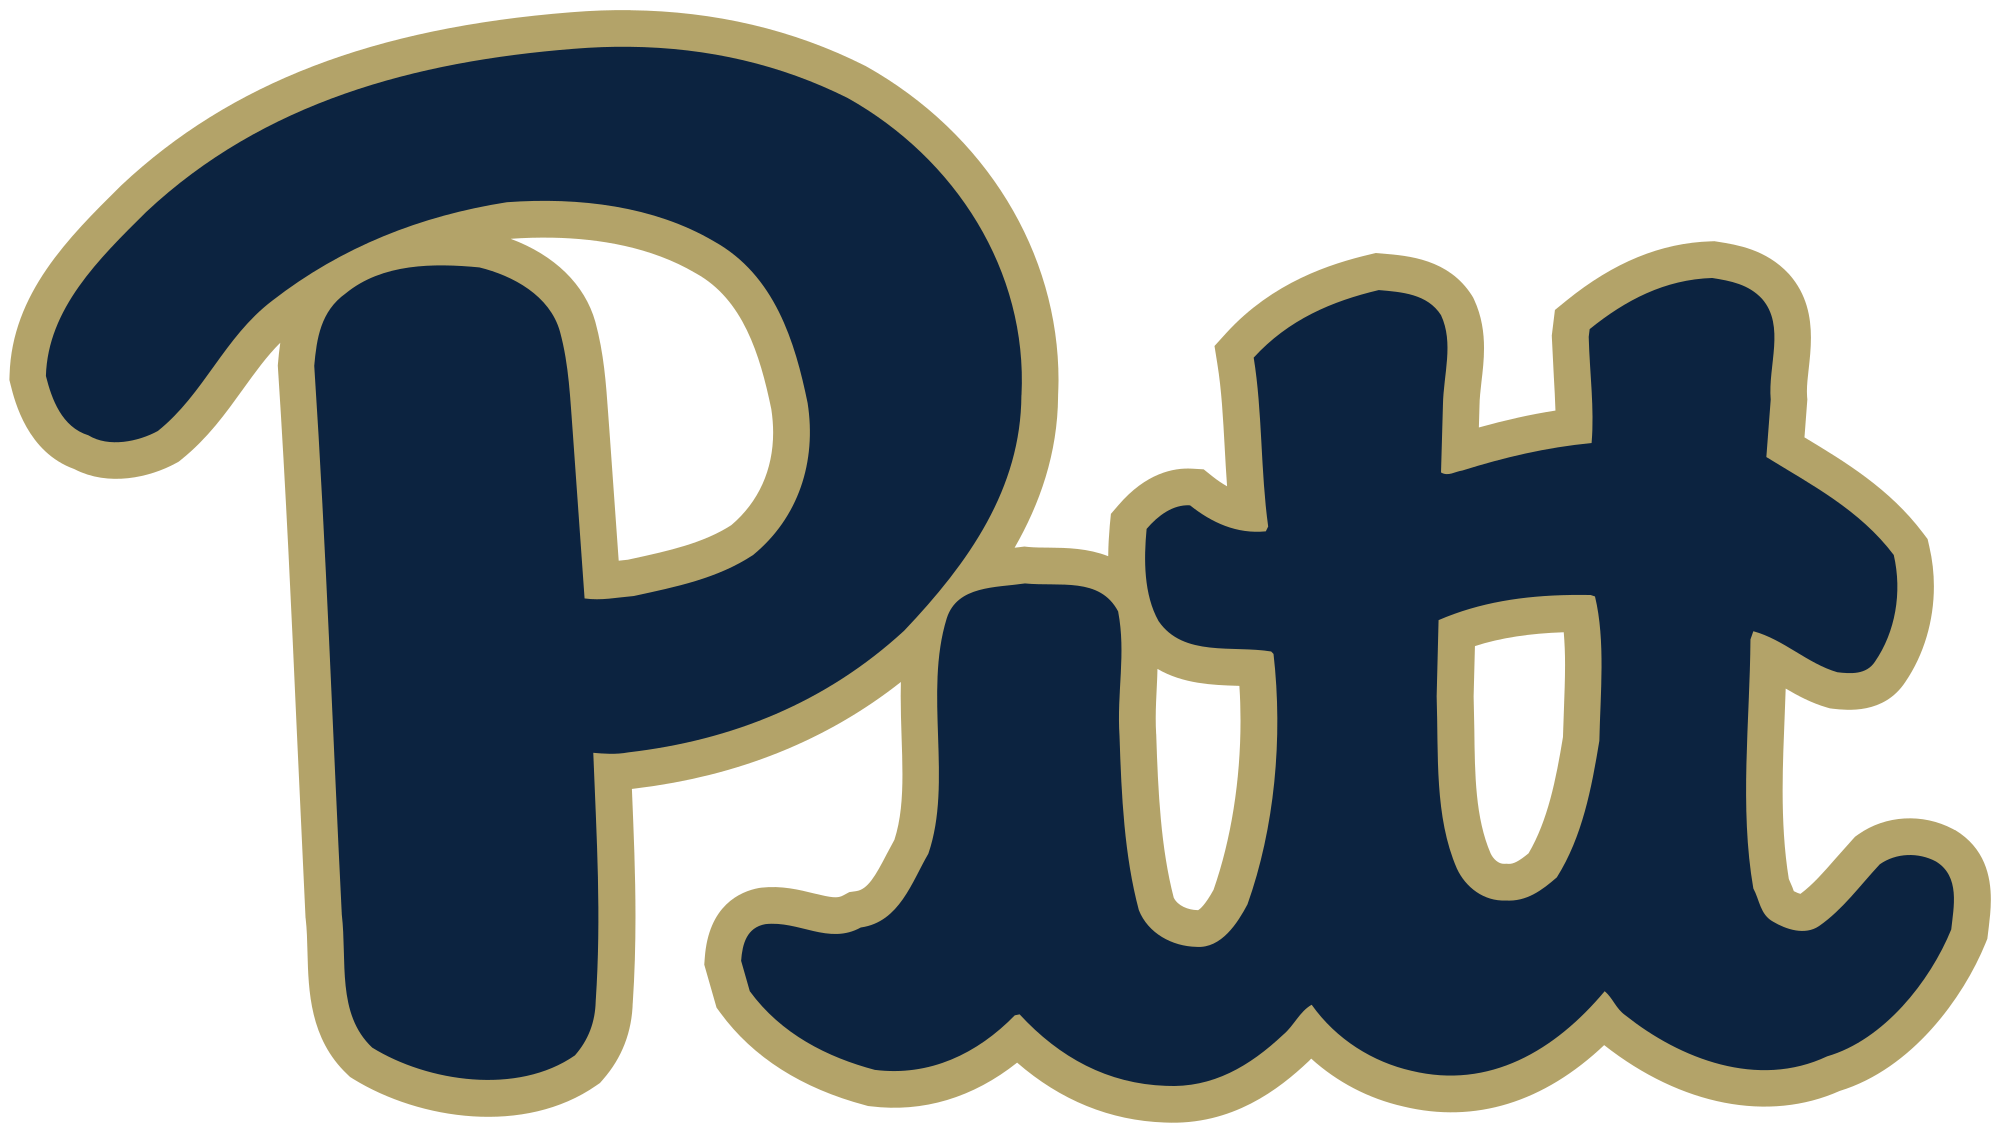 University of Pittsburgh Logo - Pittsburgh Panthers